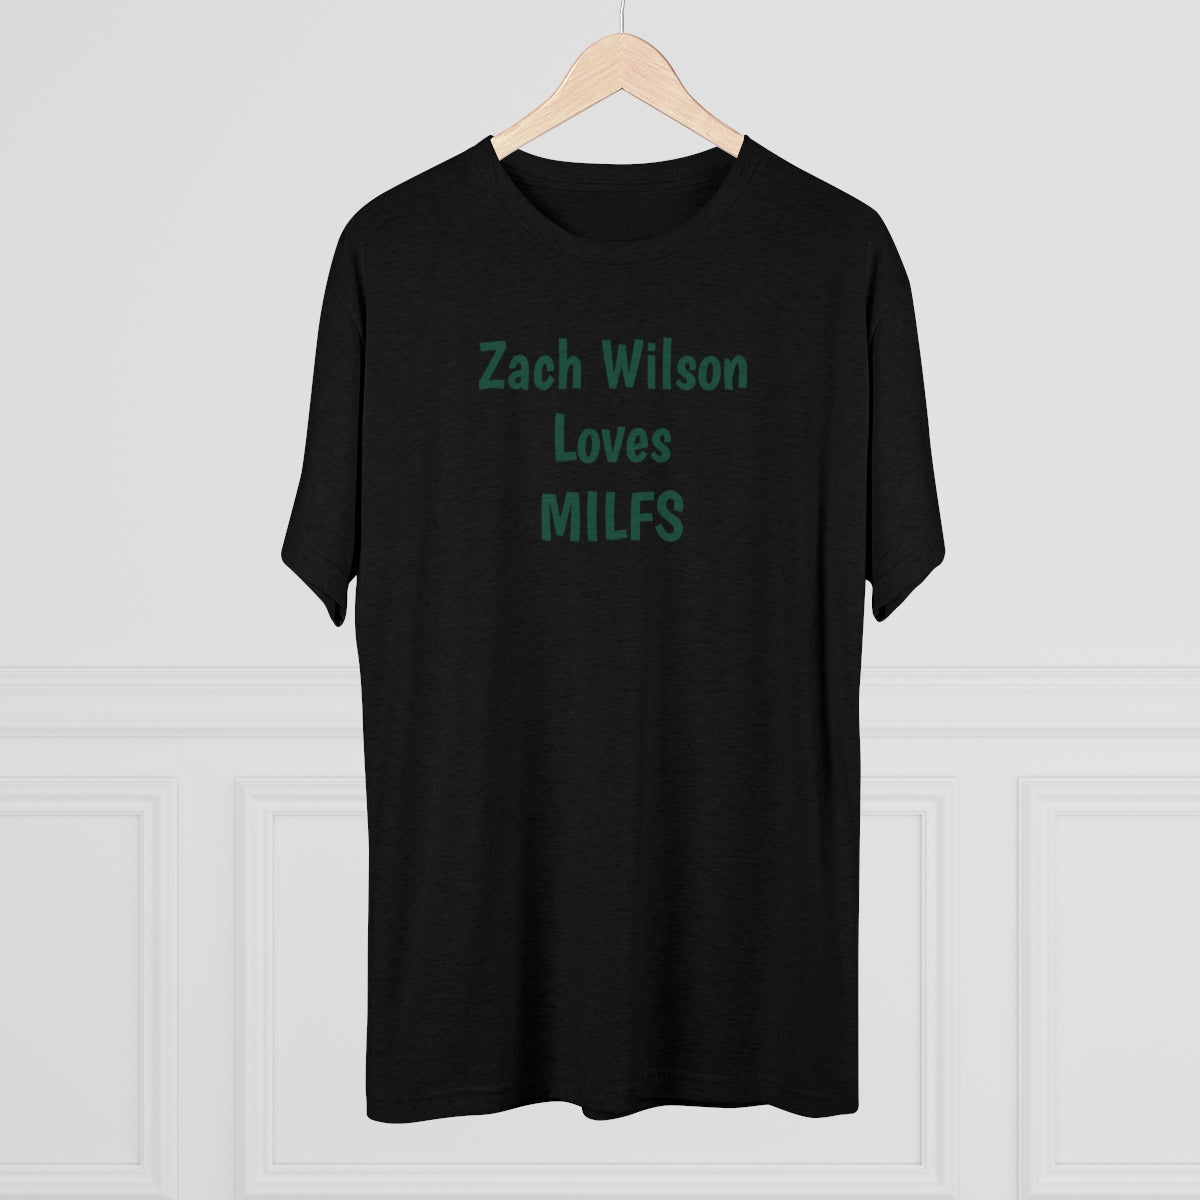 Zach Wilson MILFS T-Shirt - IsGoodBrand